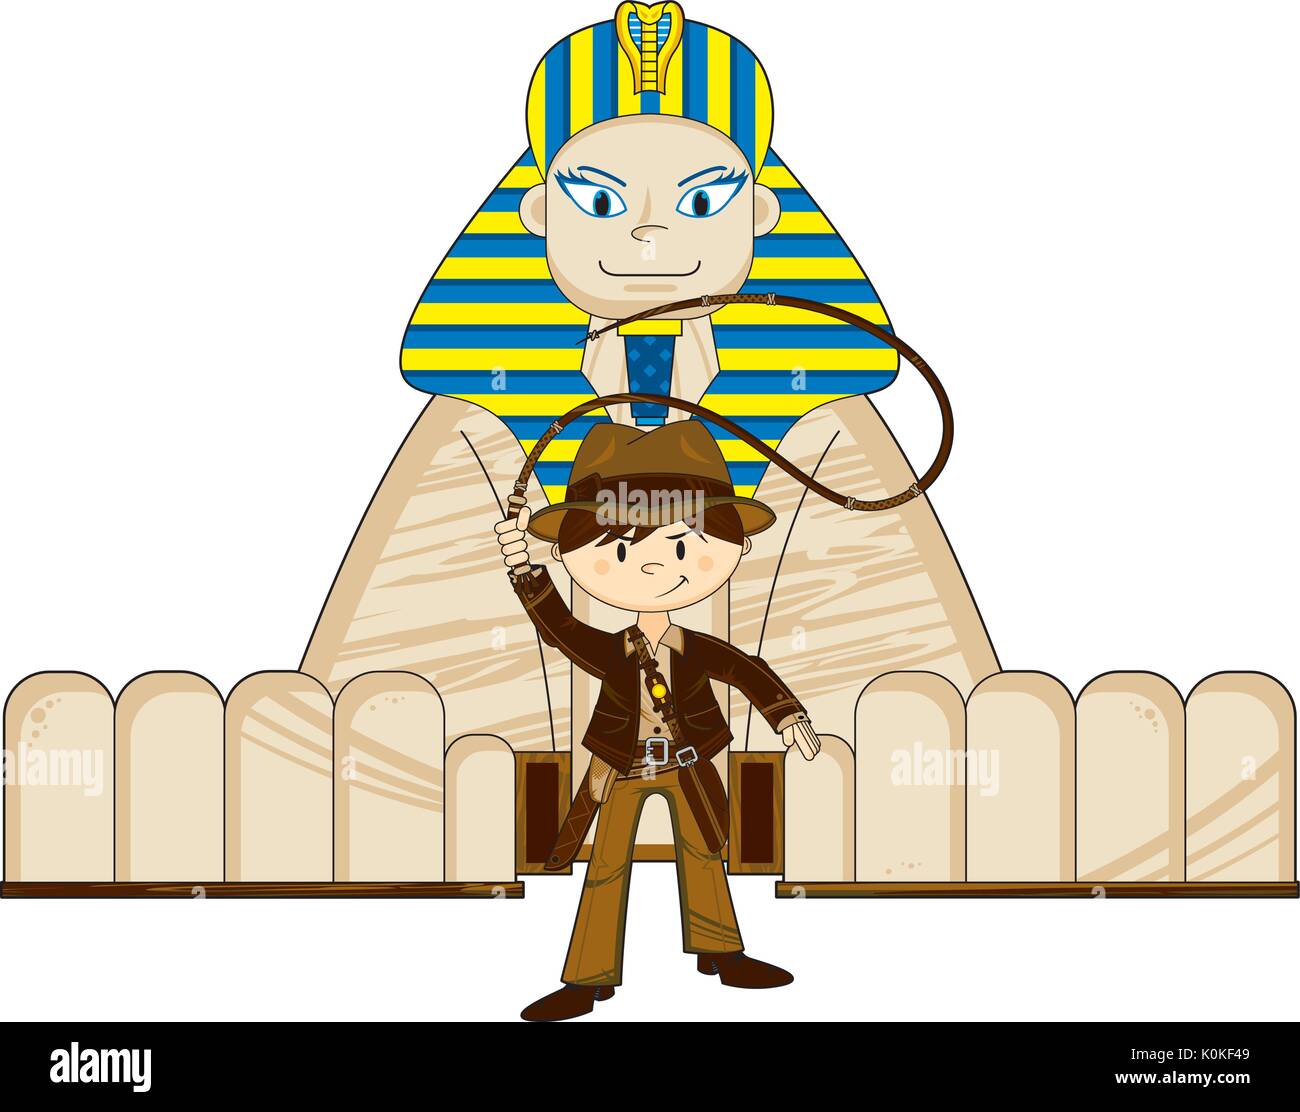 Cute Cartoon Explorer Character and Egyptian Sphinx Illustration Stock Vector